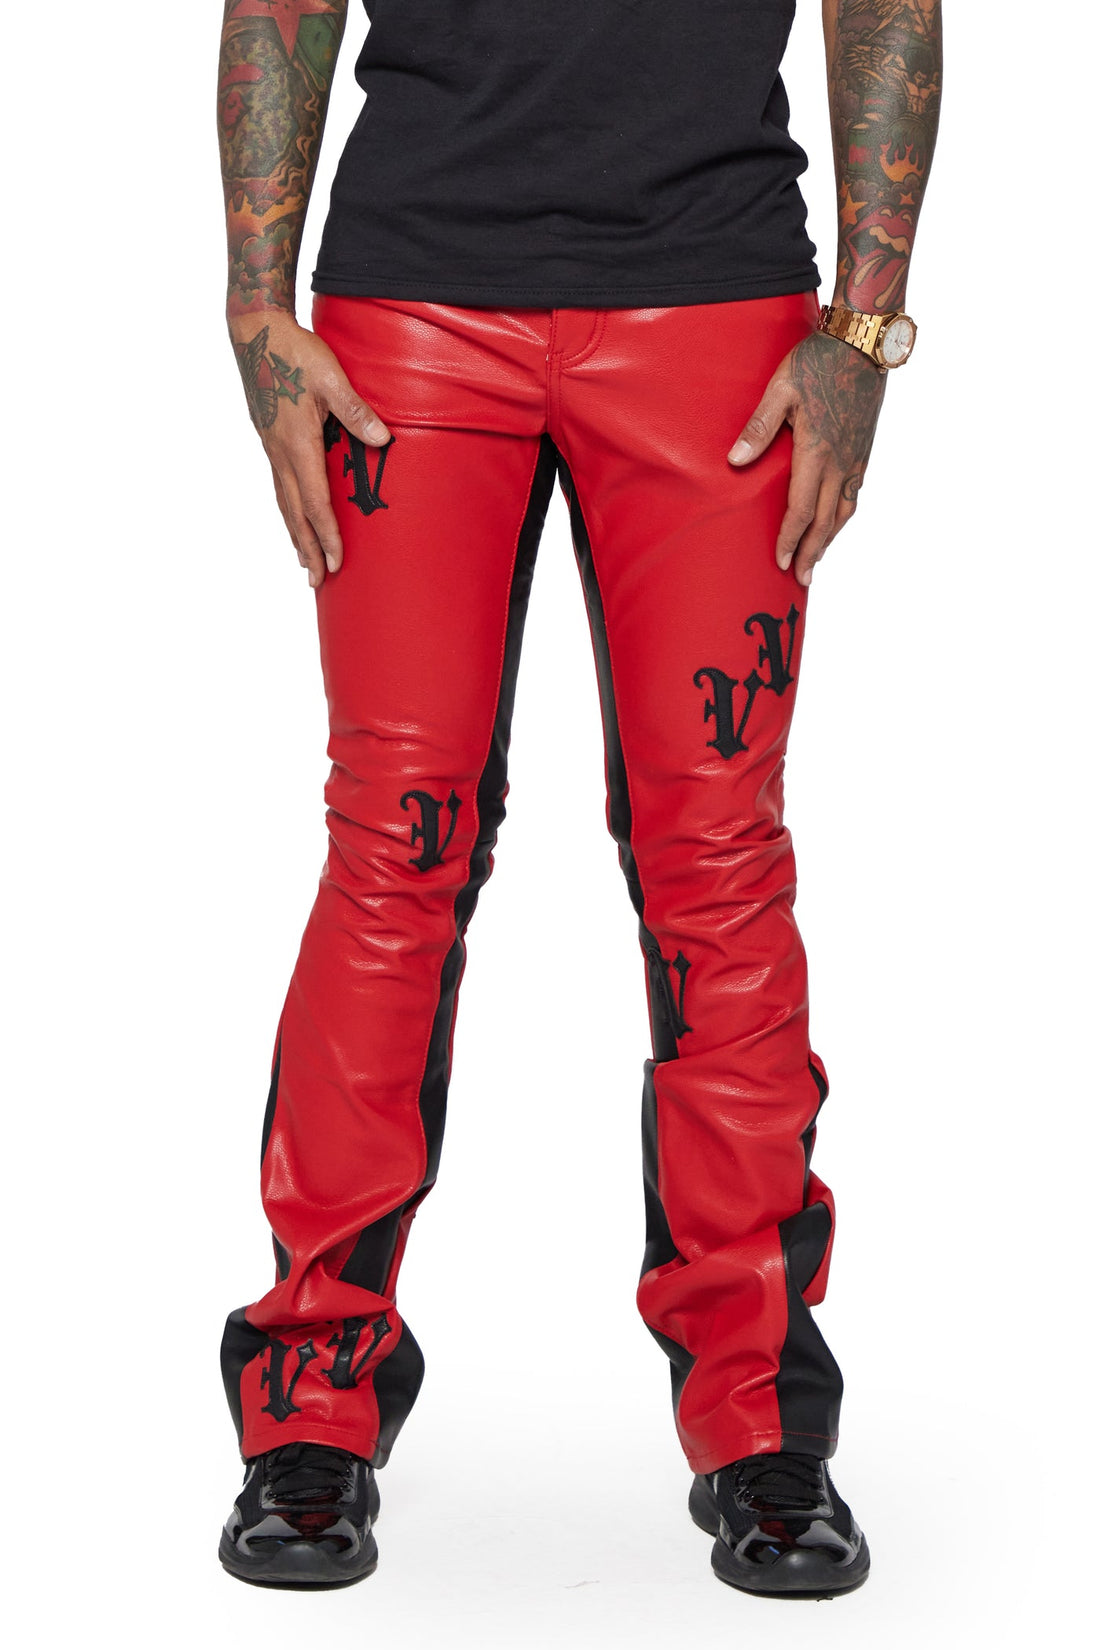 VALABASAS STACKED "ALI" RED BLACK Jeans